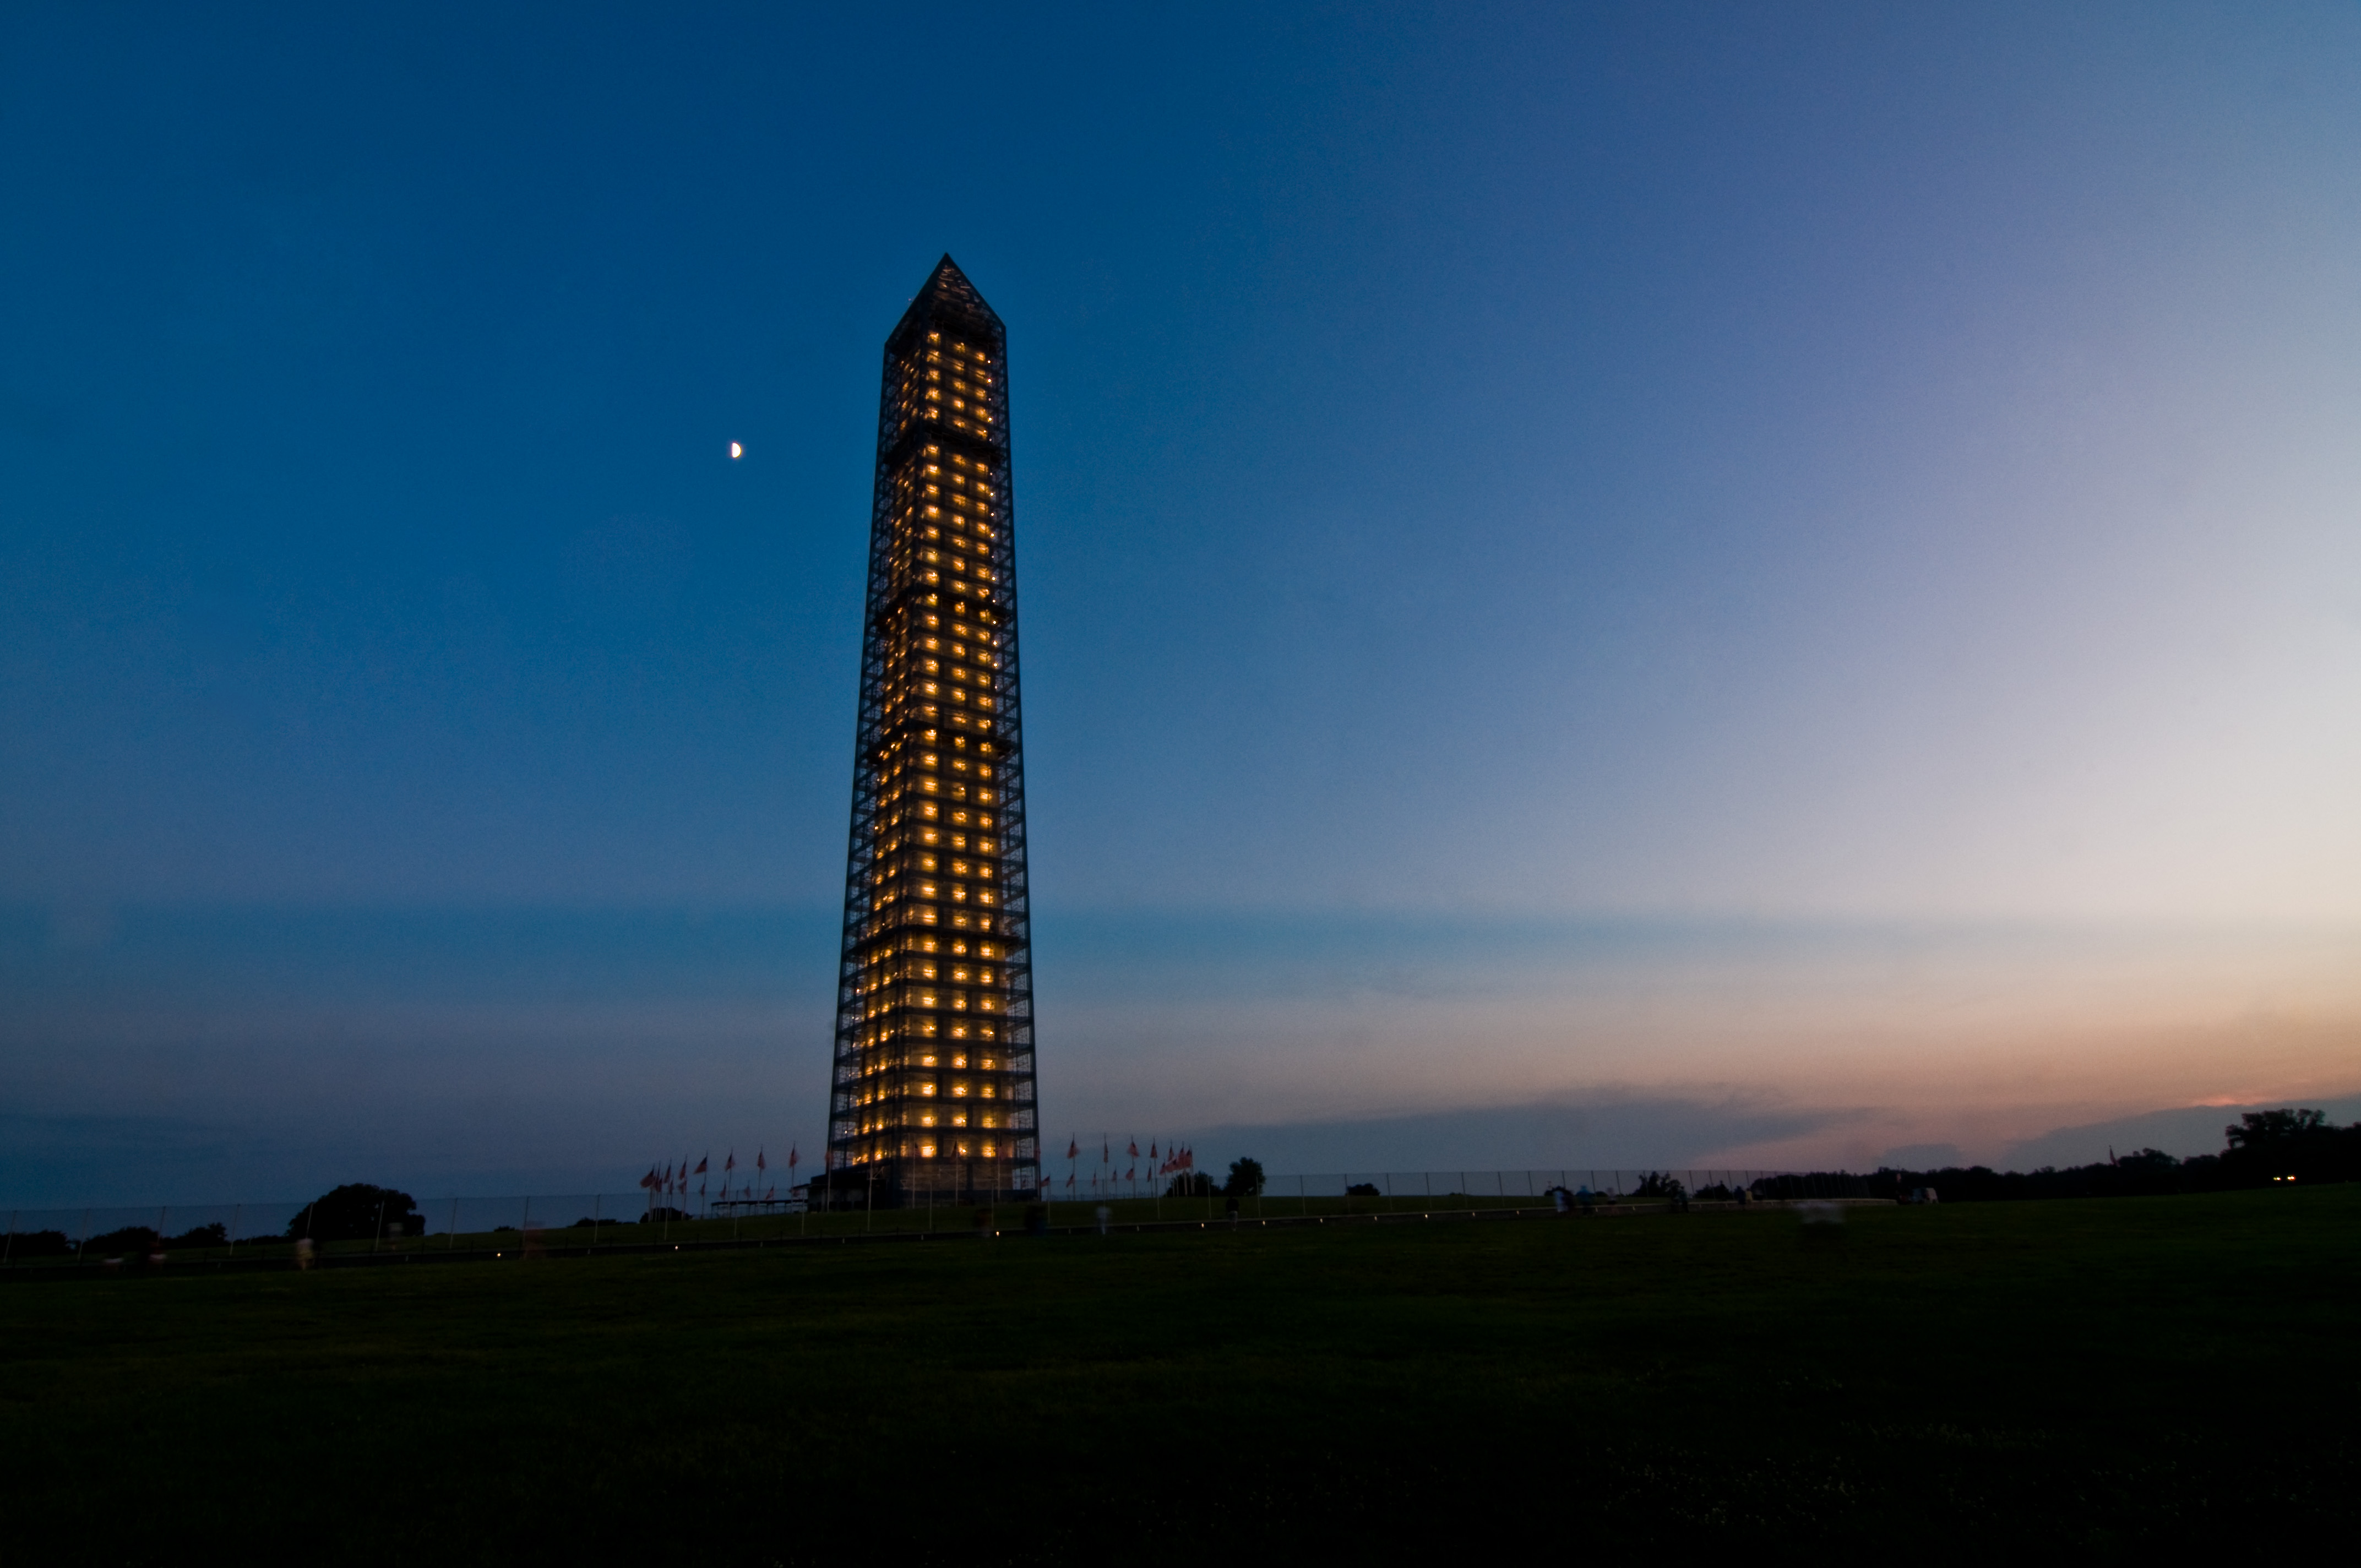 Washington Monument - In the Failing Light - 07-16-13